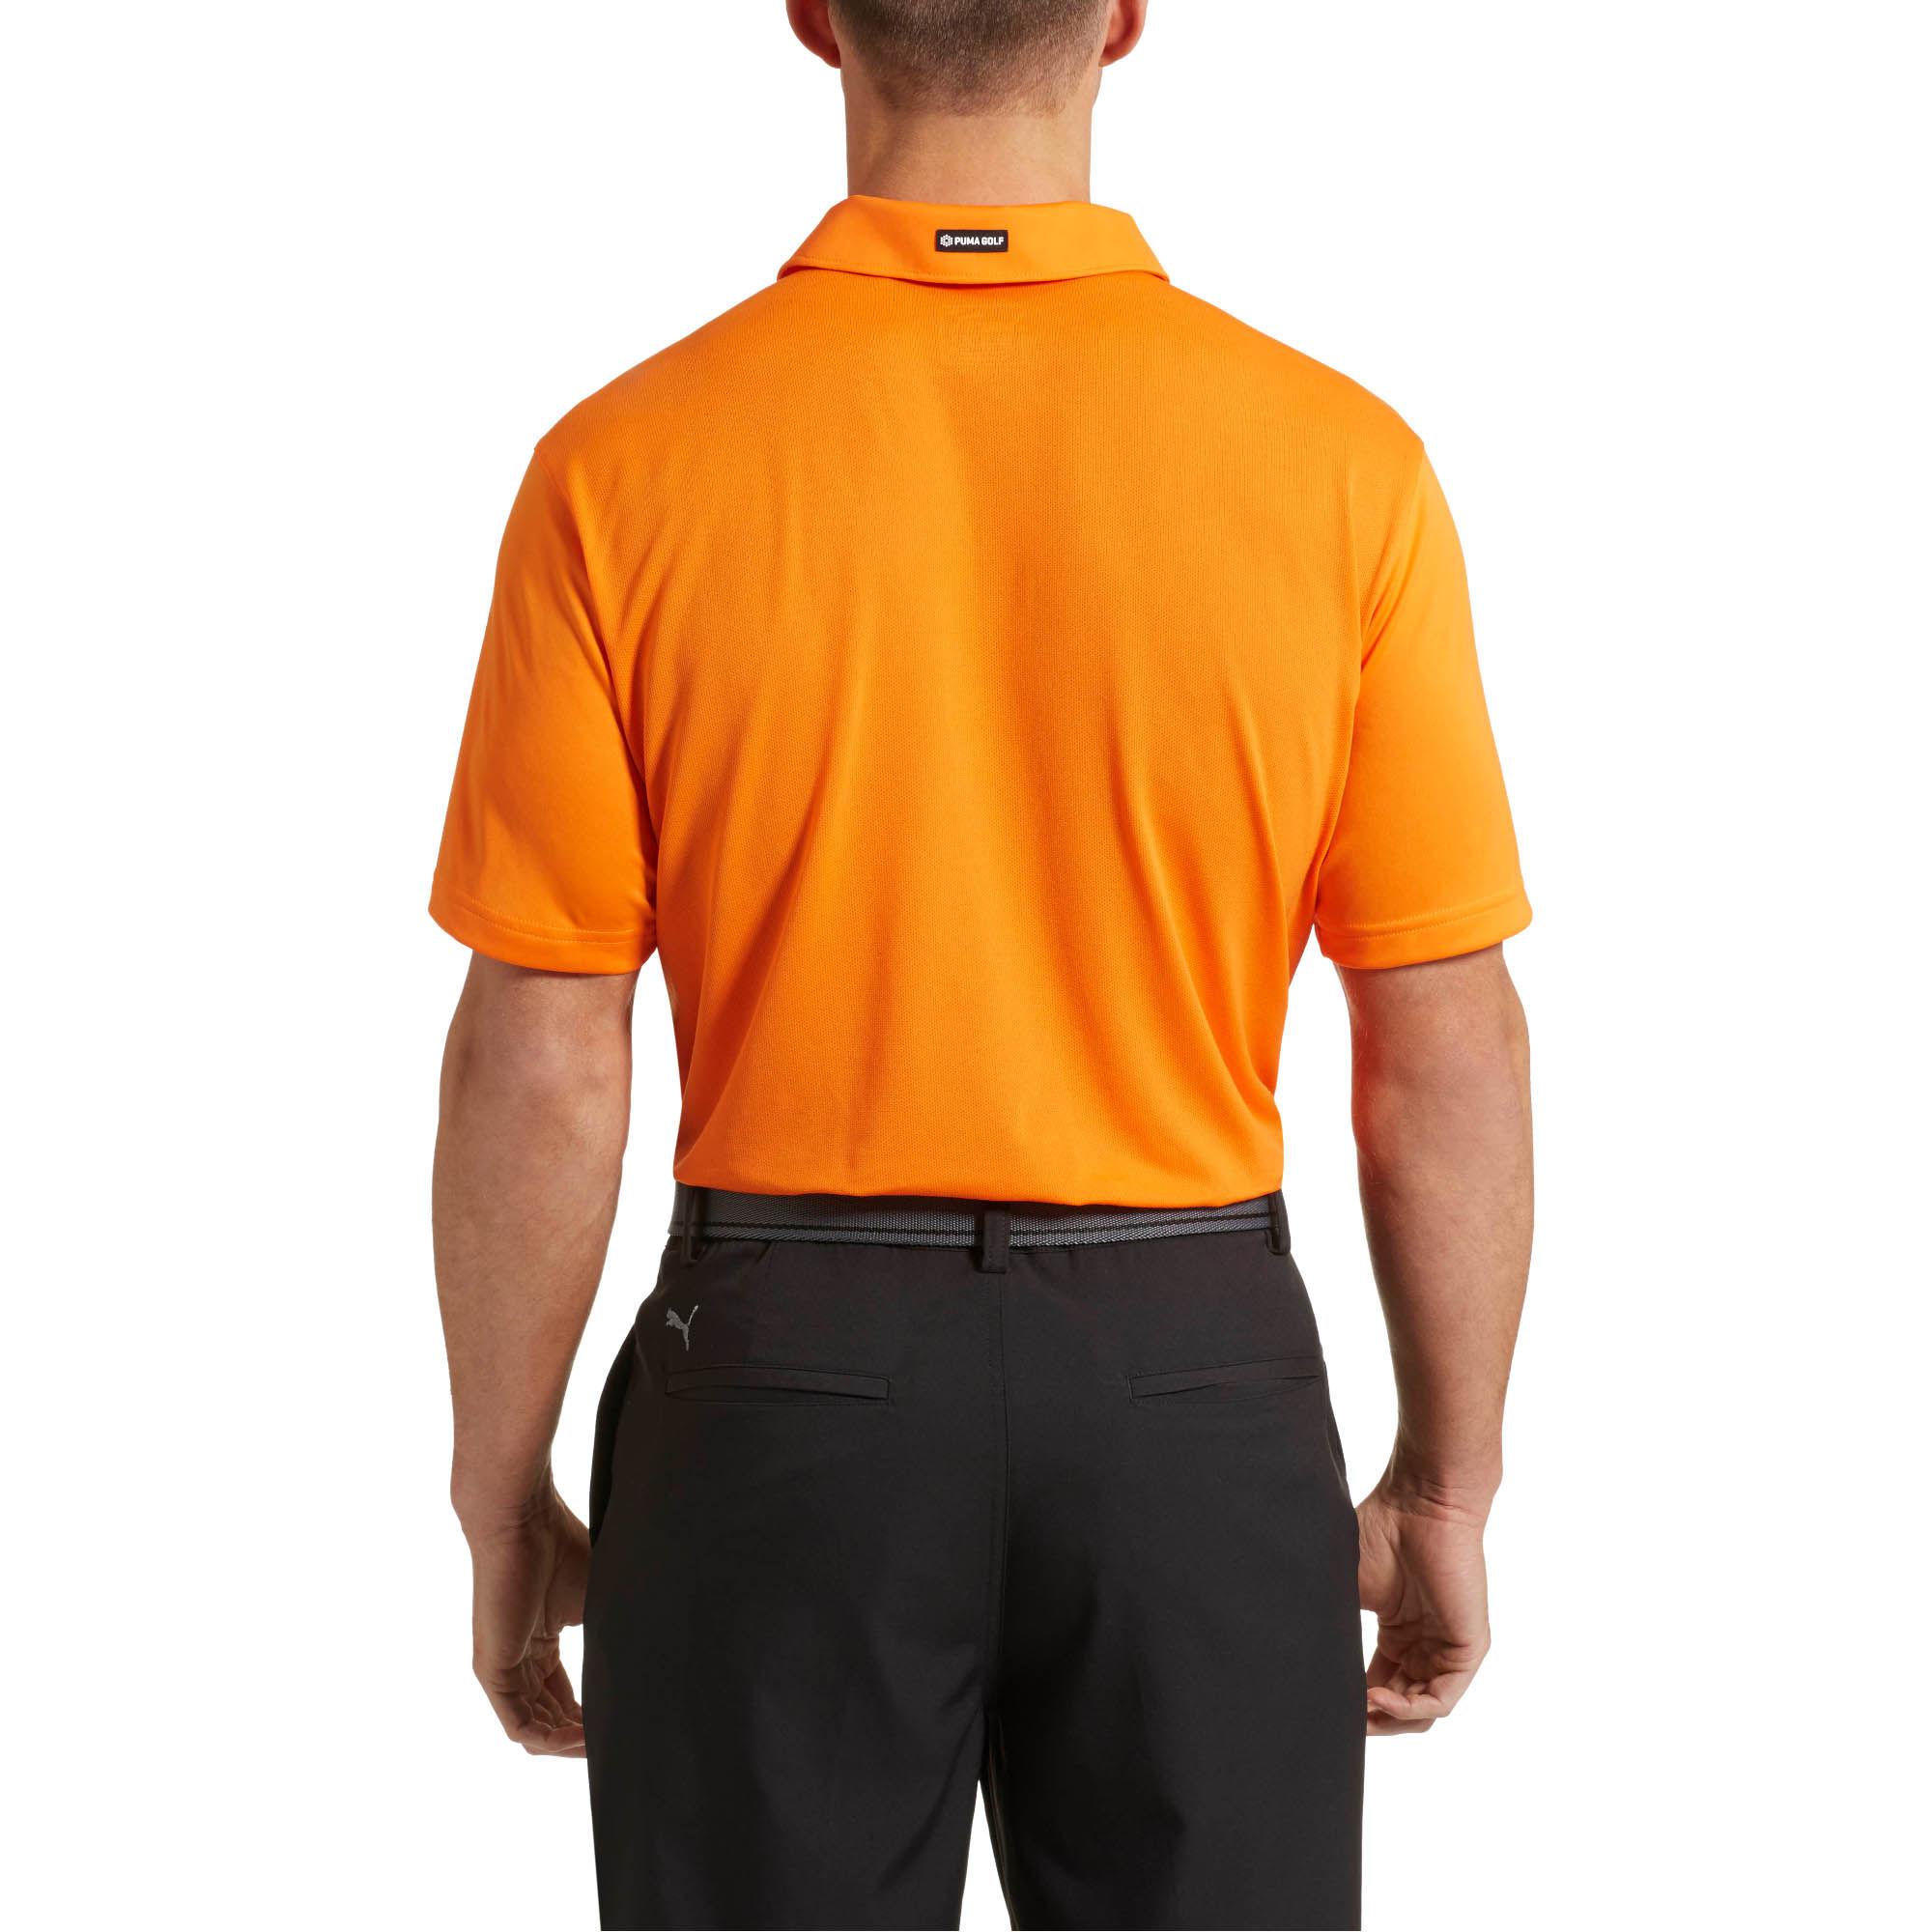 Lyst PUMA Pounce Golf  Polo  Shirt in Orange  for Men